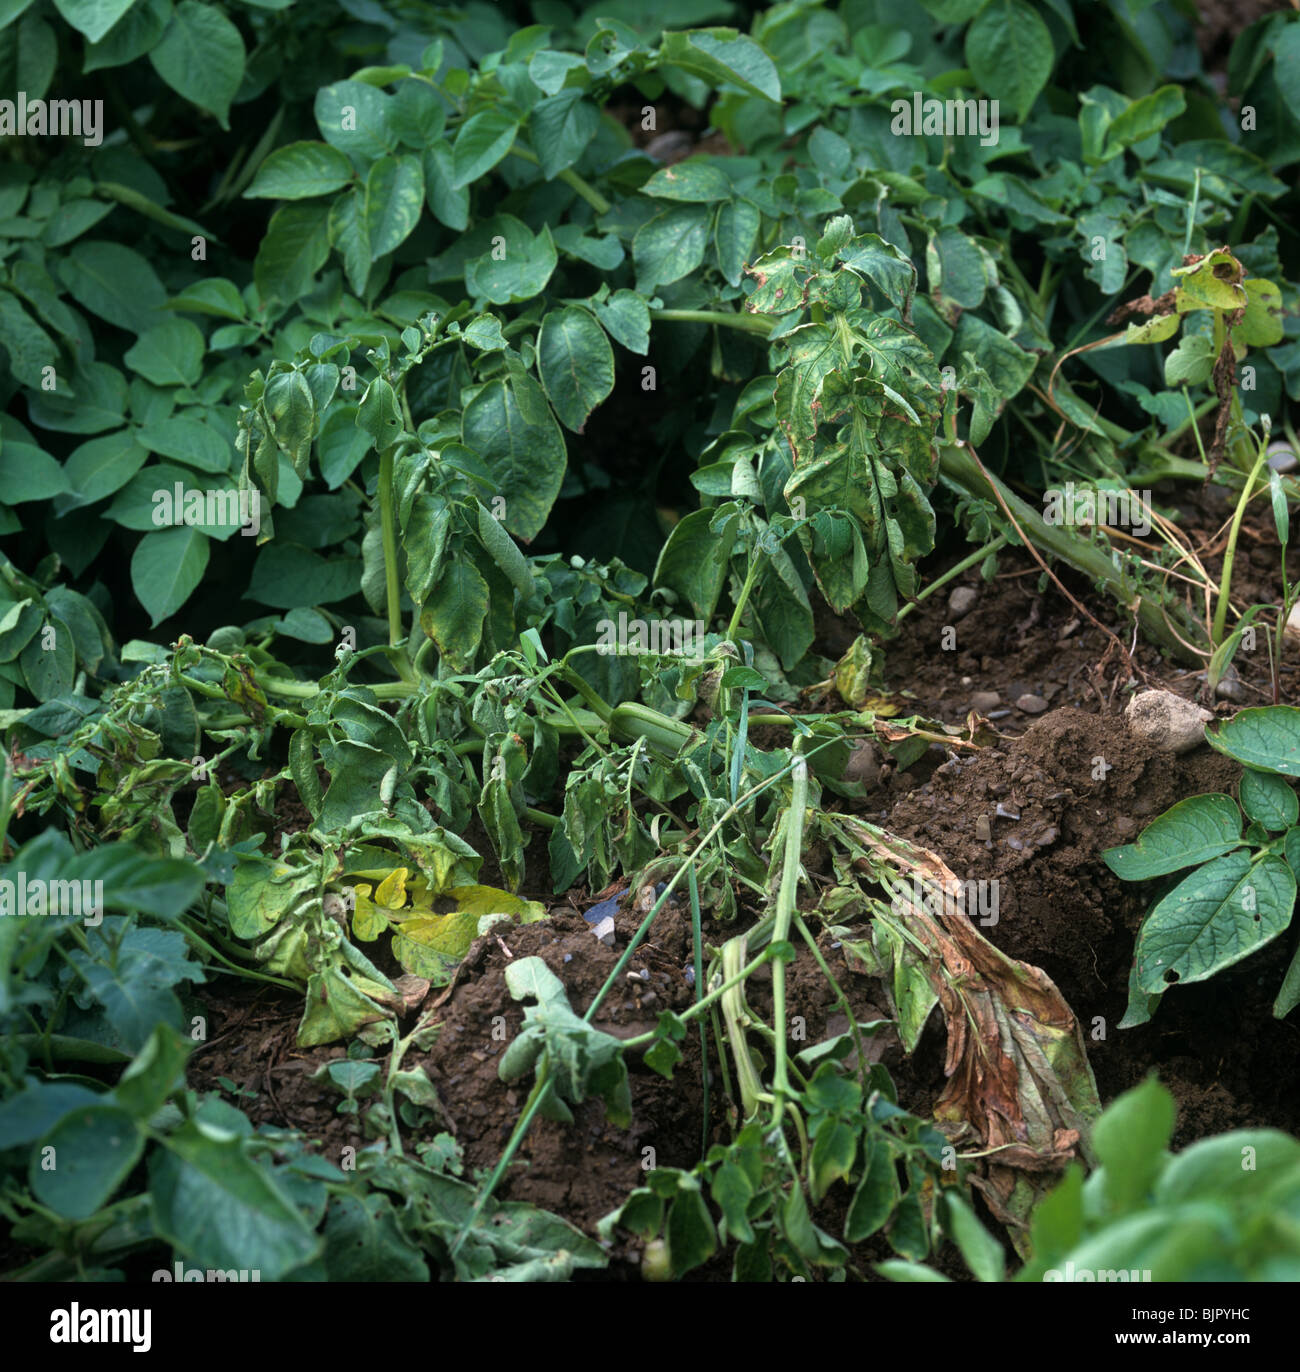 Ring rot (Corynebacterium sepedonicum) aerial damage to potato plants, Maine, USA Stock Photo